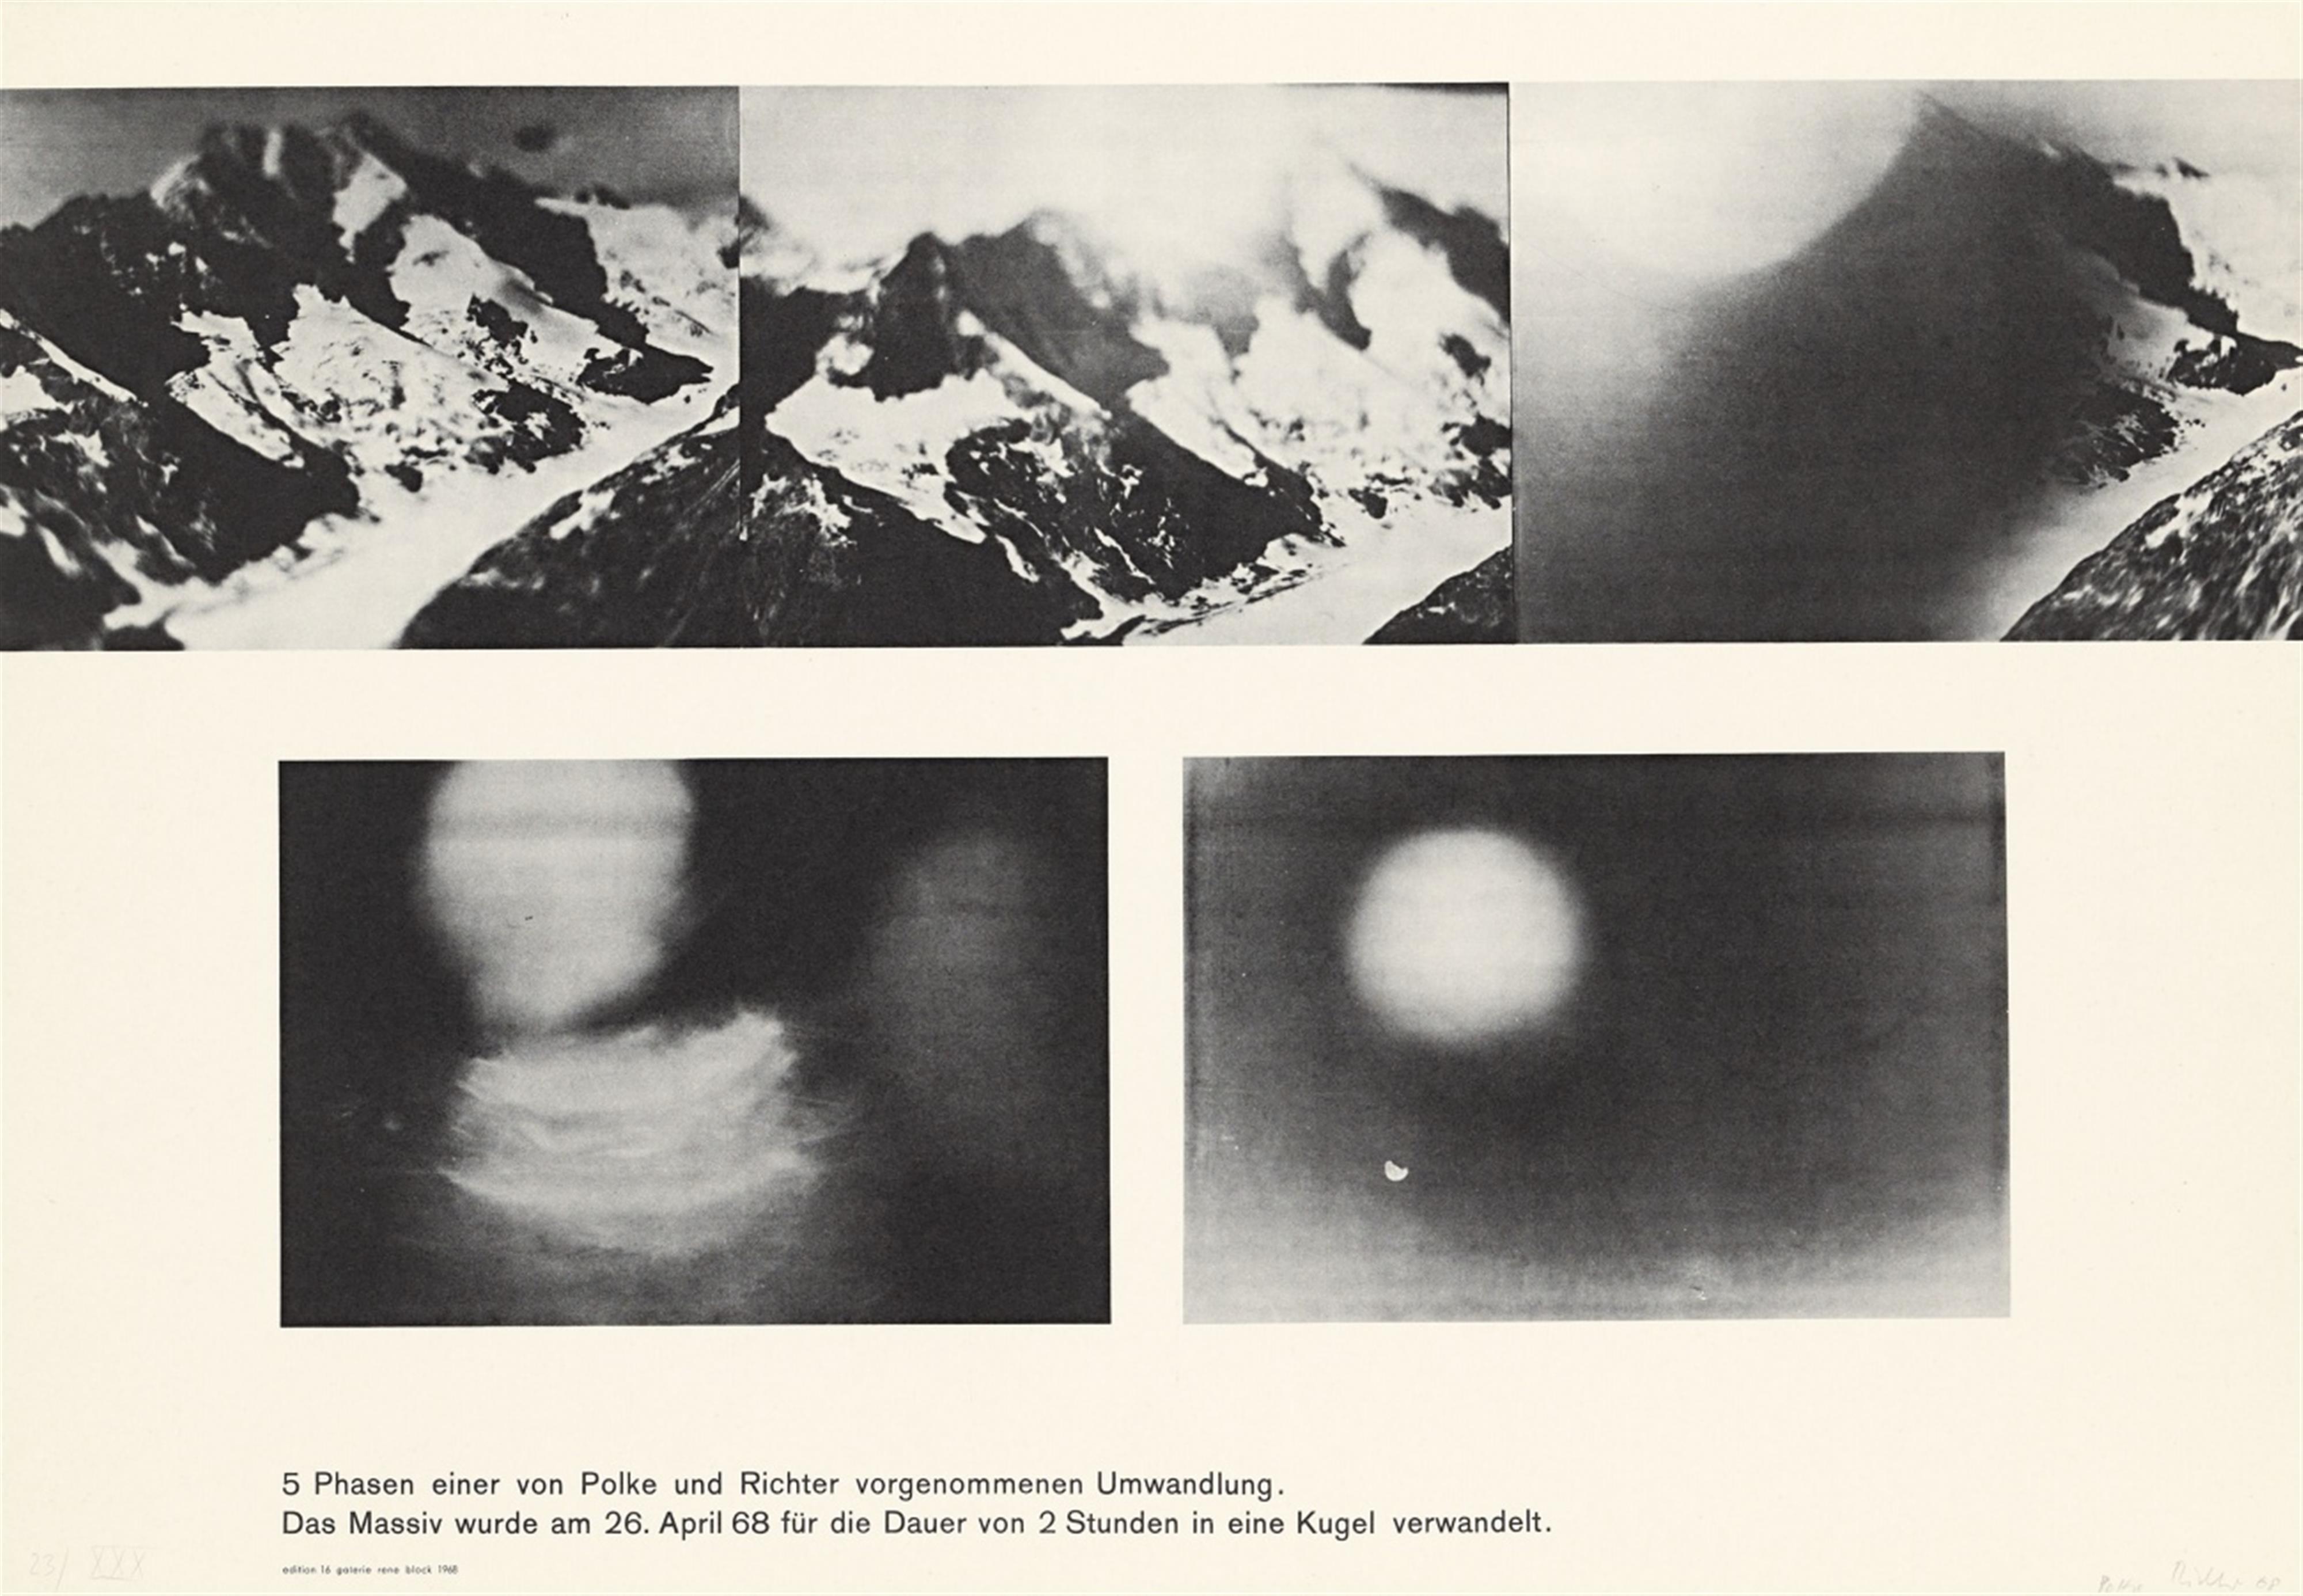 Sigmar Polke
Gerhard Richter - Umwandlung - image-1